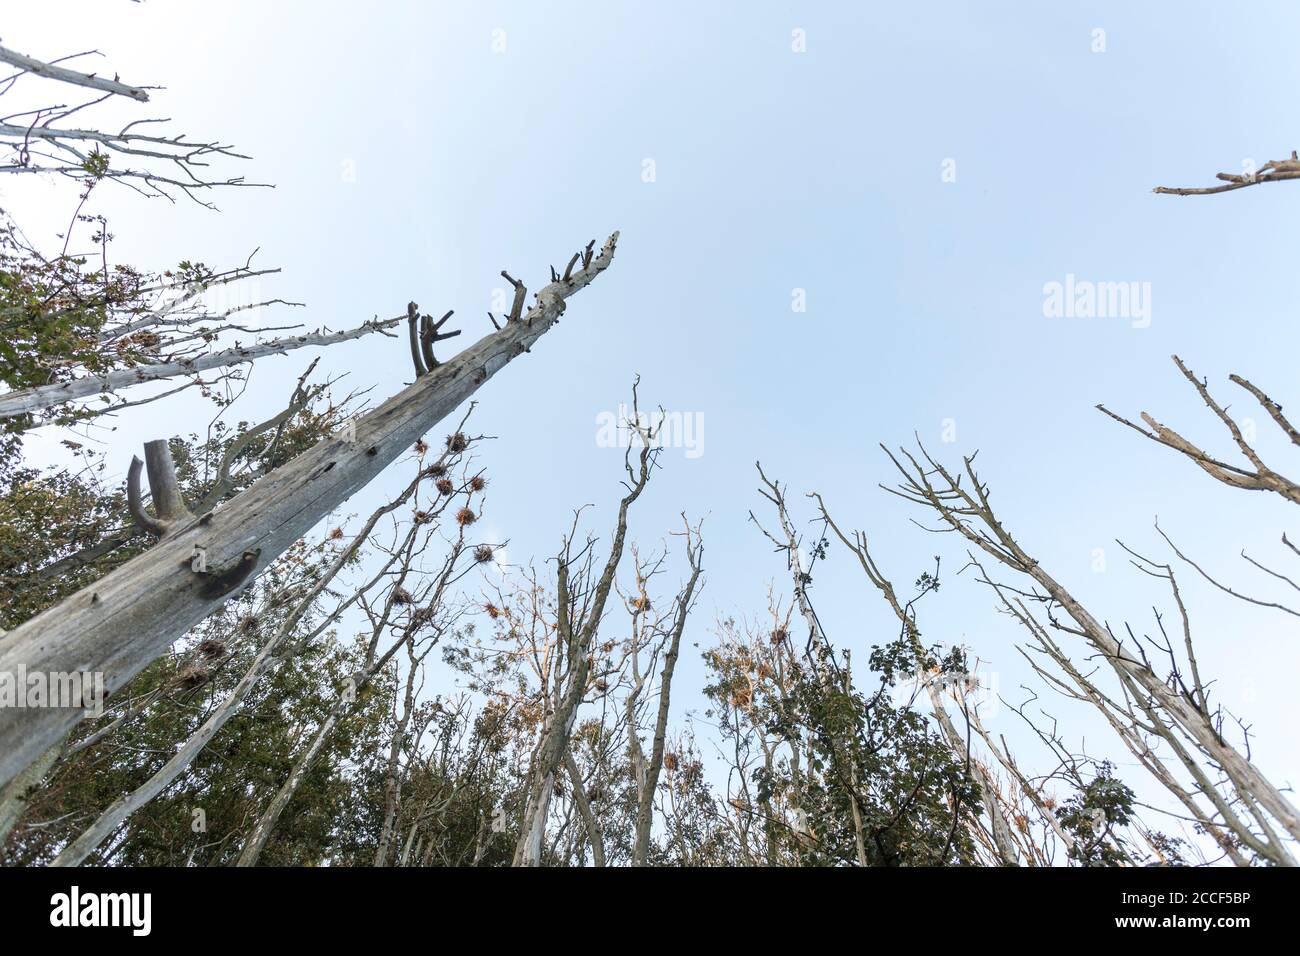 Vista degli alberi morti nella colonia cormorana Niehof, Meclemburgo-Pomerania occidentale, Germania Foto Stock